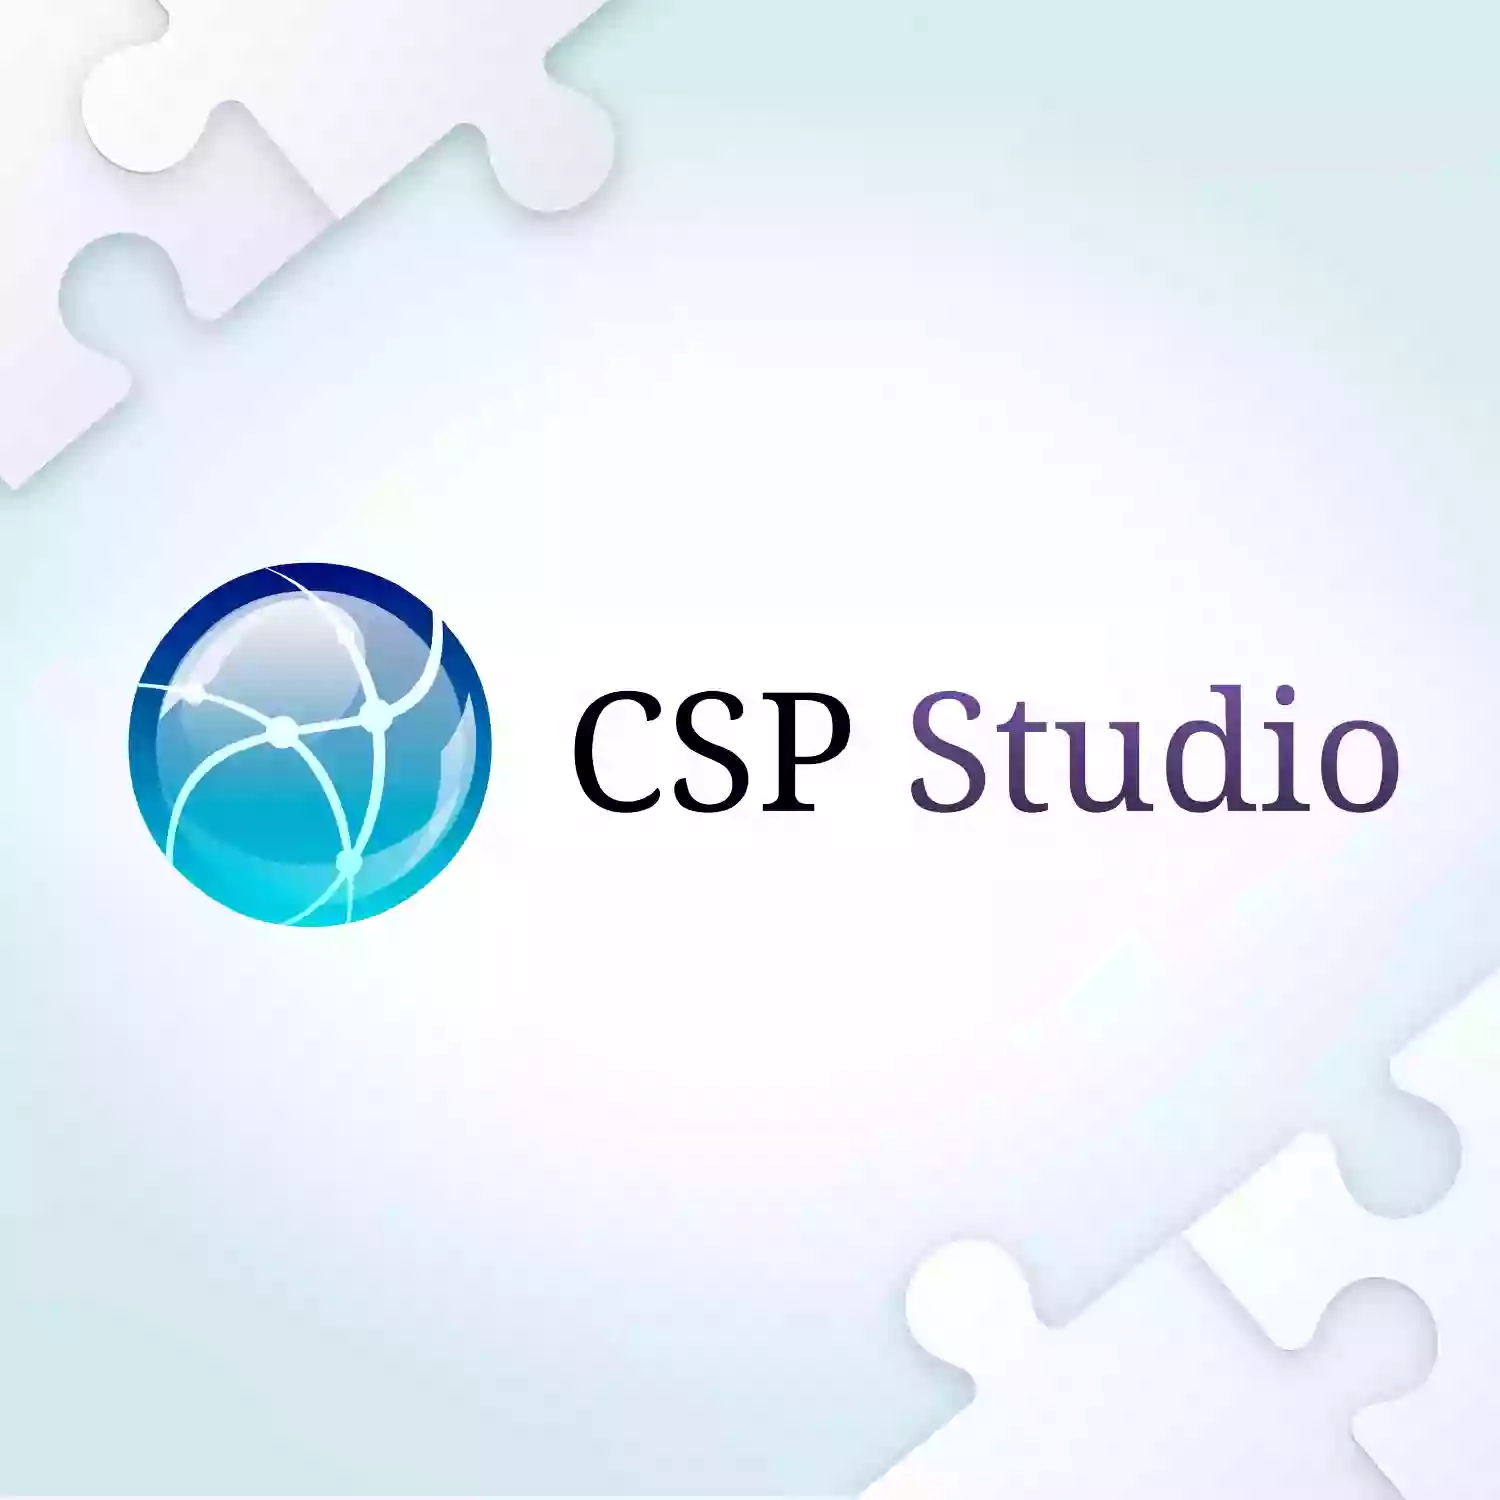 CSP Studio - LEGAL TAX & Business Plan Advisory